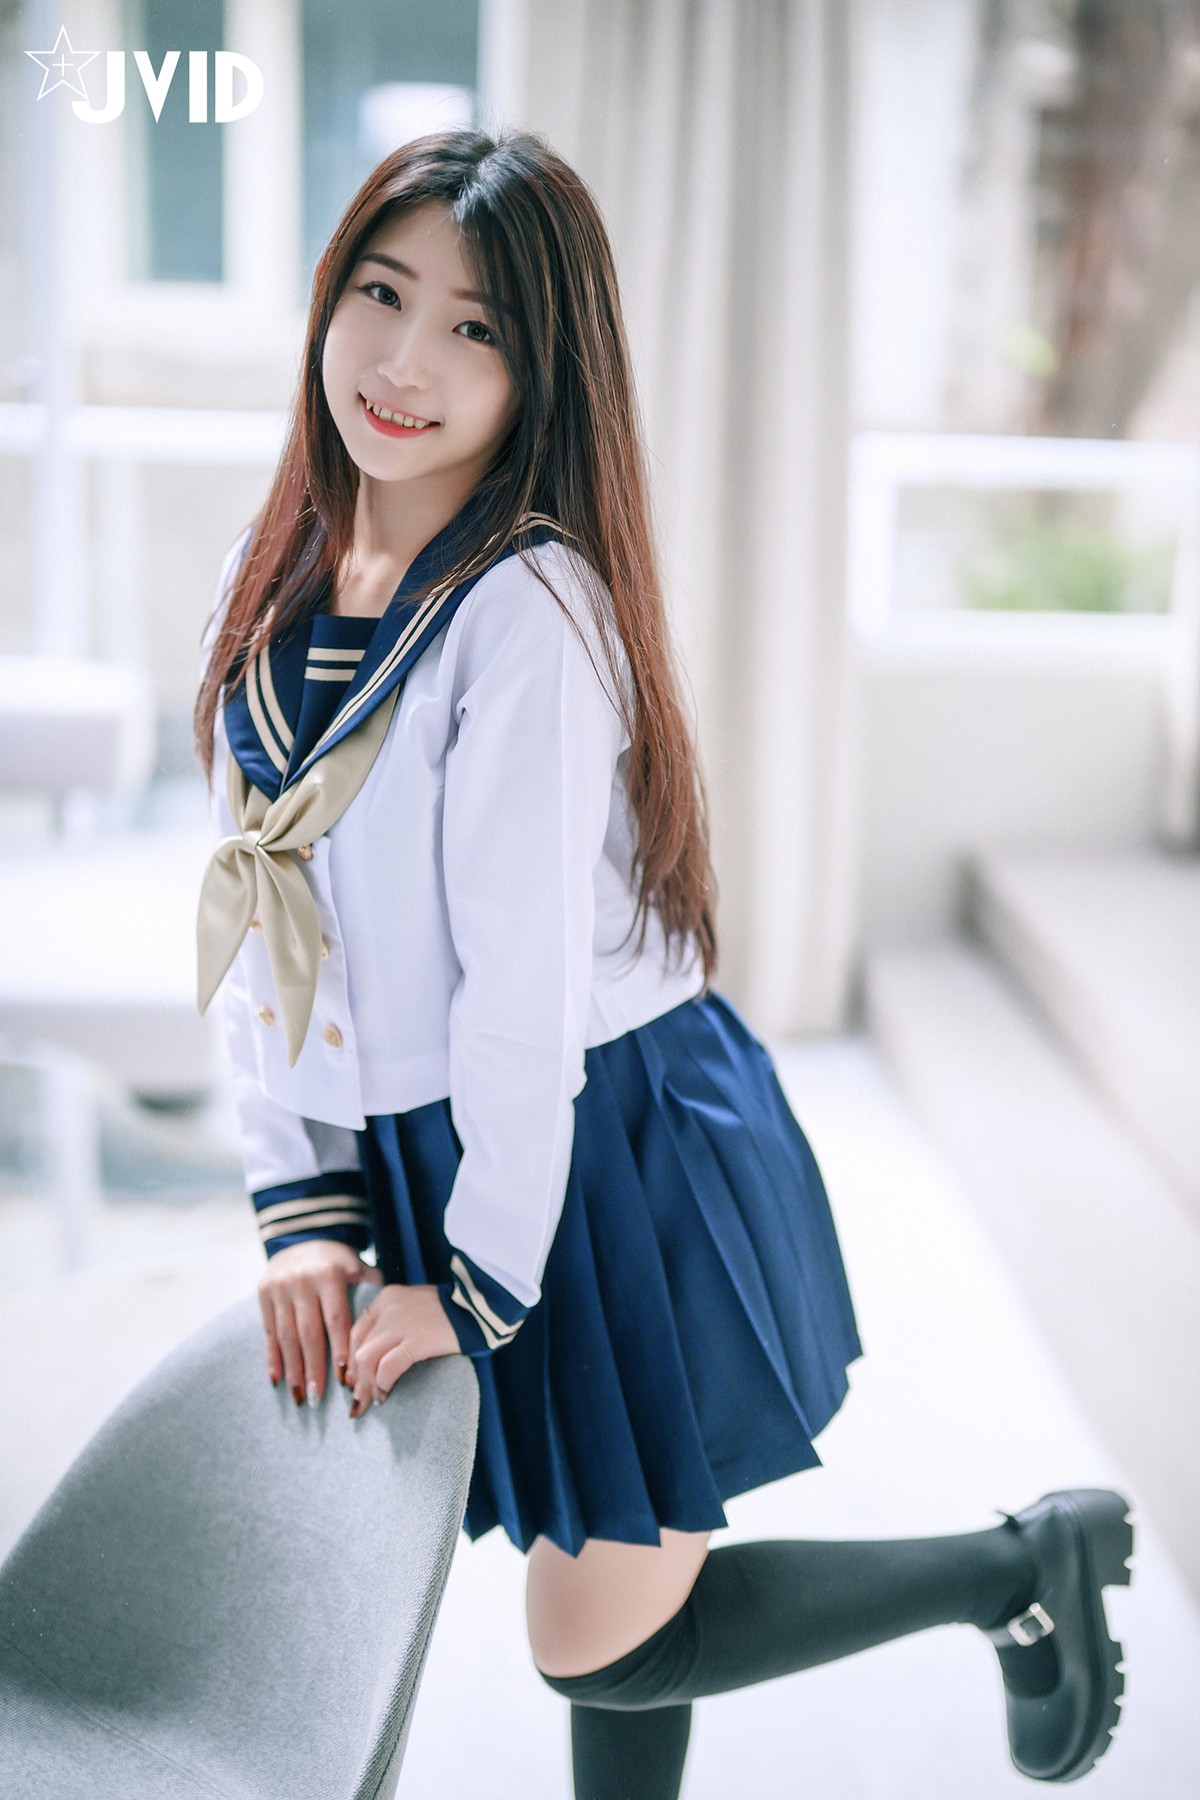 JVID 肉包 Mini – Sweet Schoolgirl